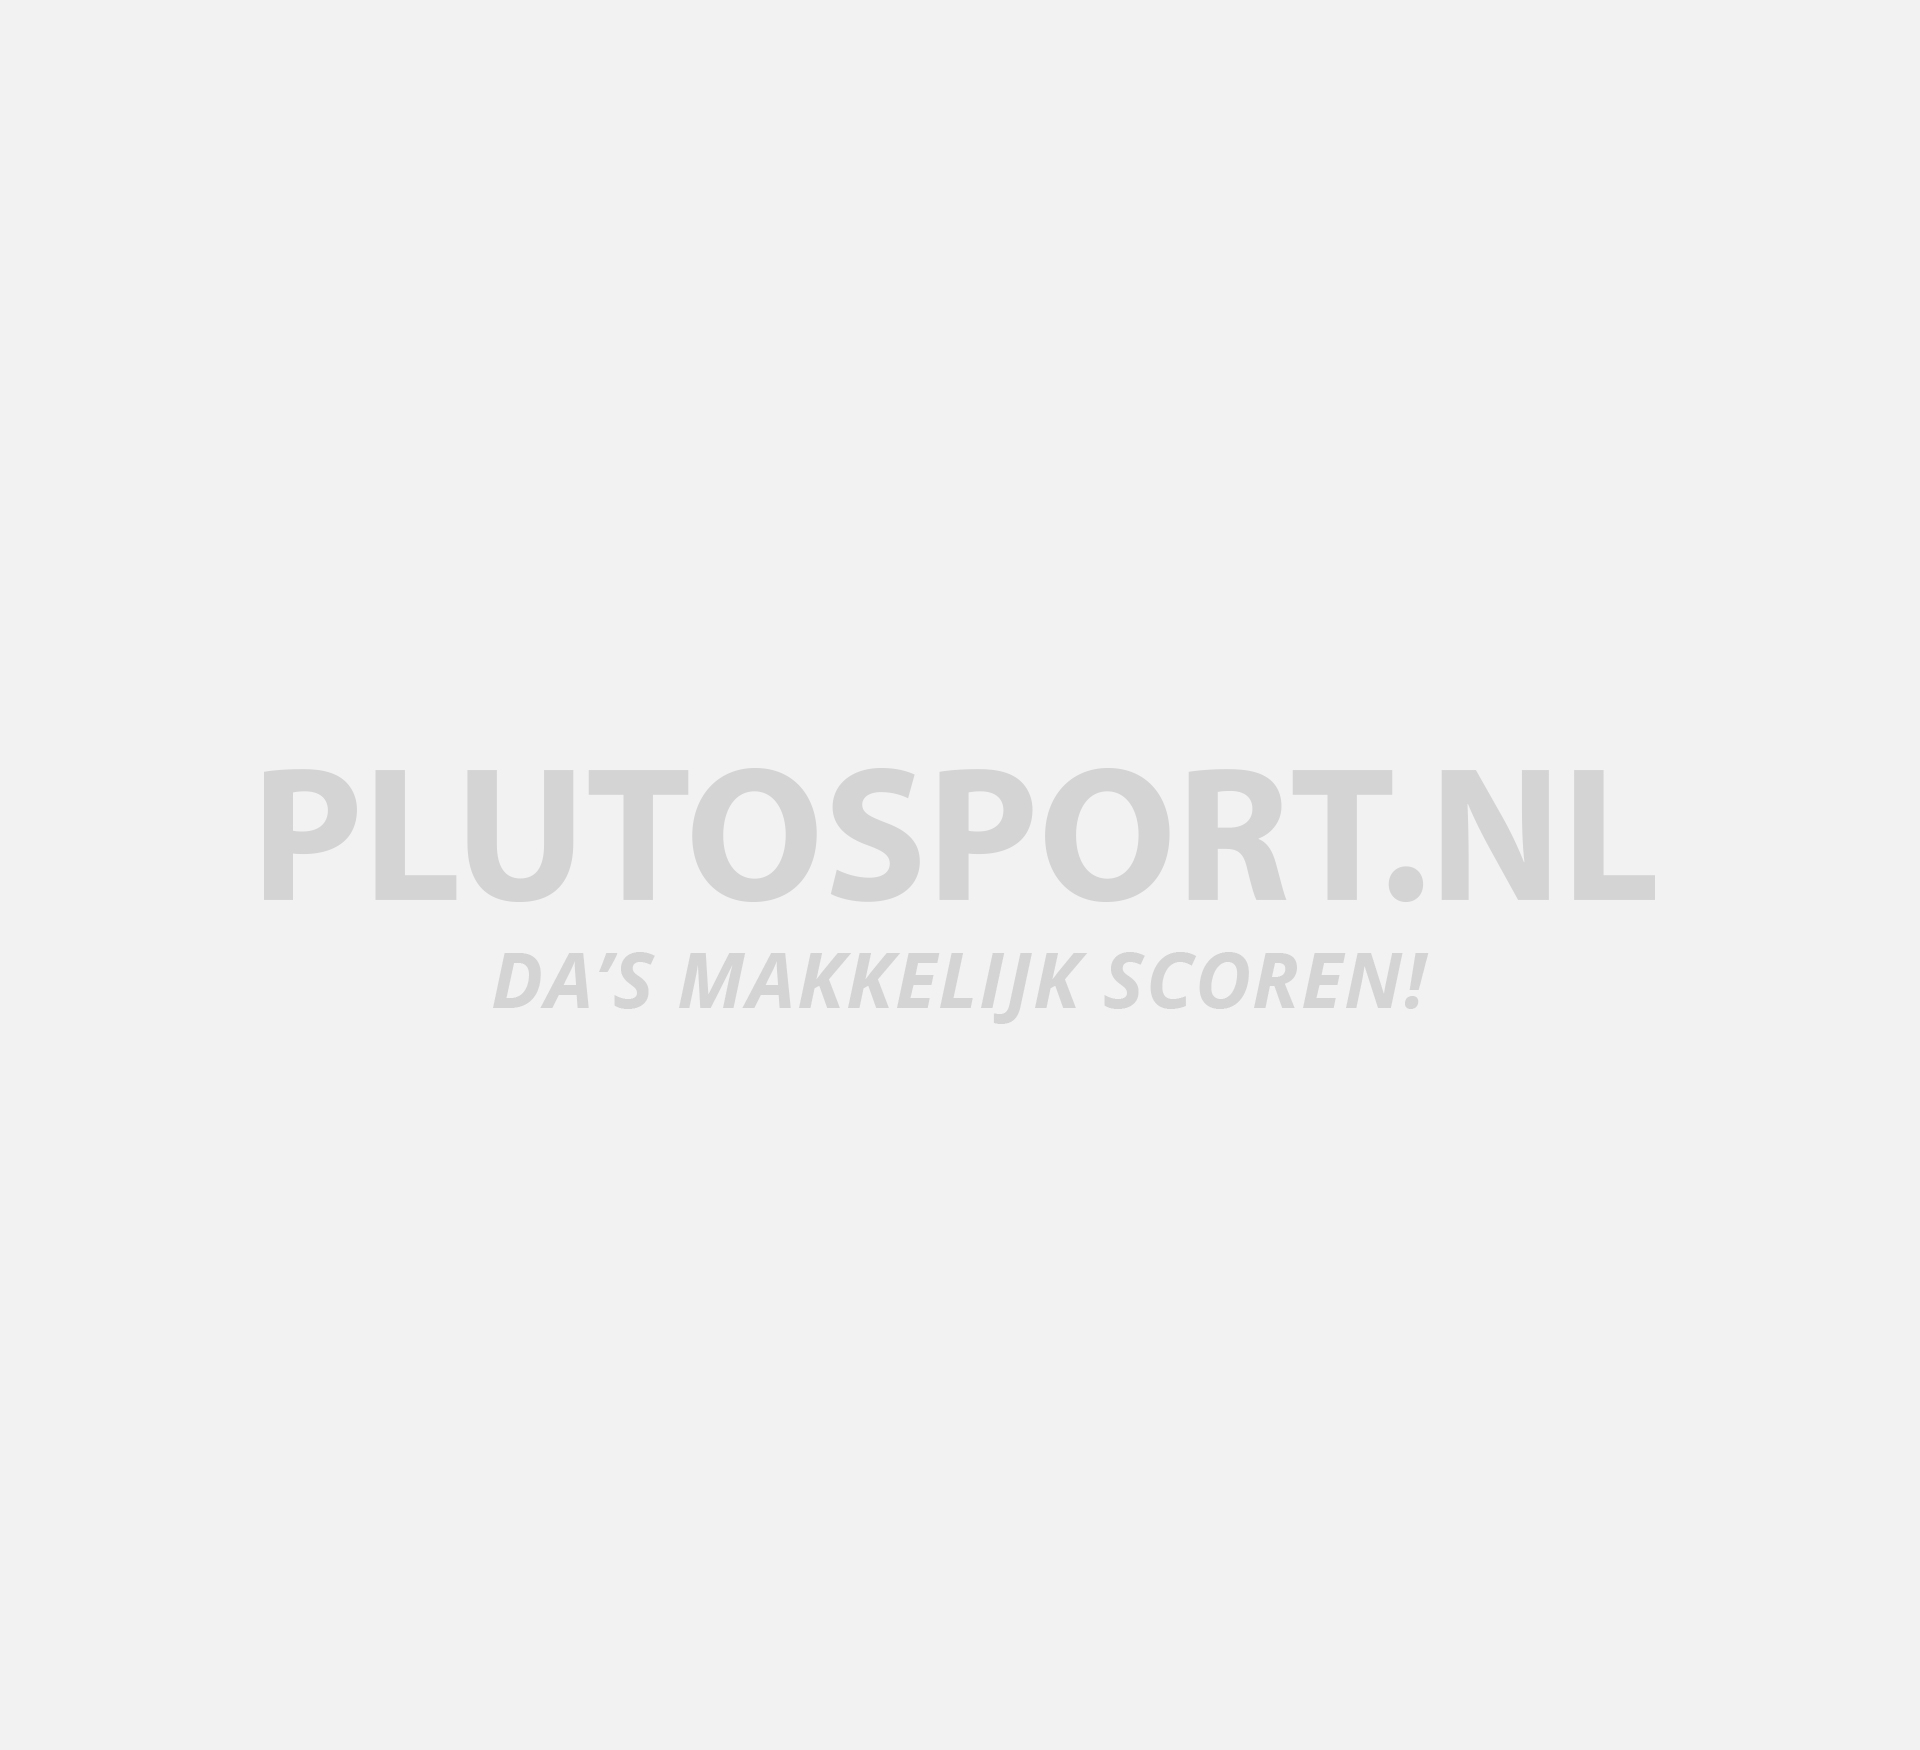 Adidas-Ajax-Uitshirt-Junior-2210141342